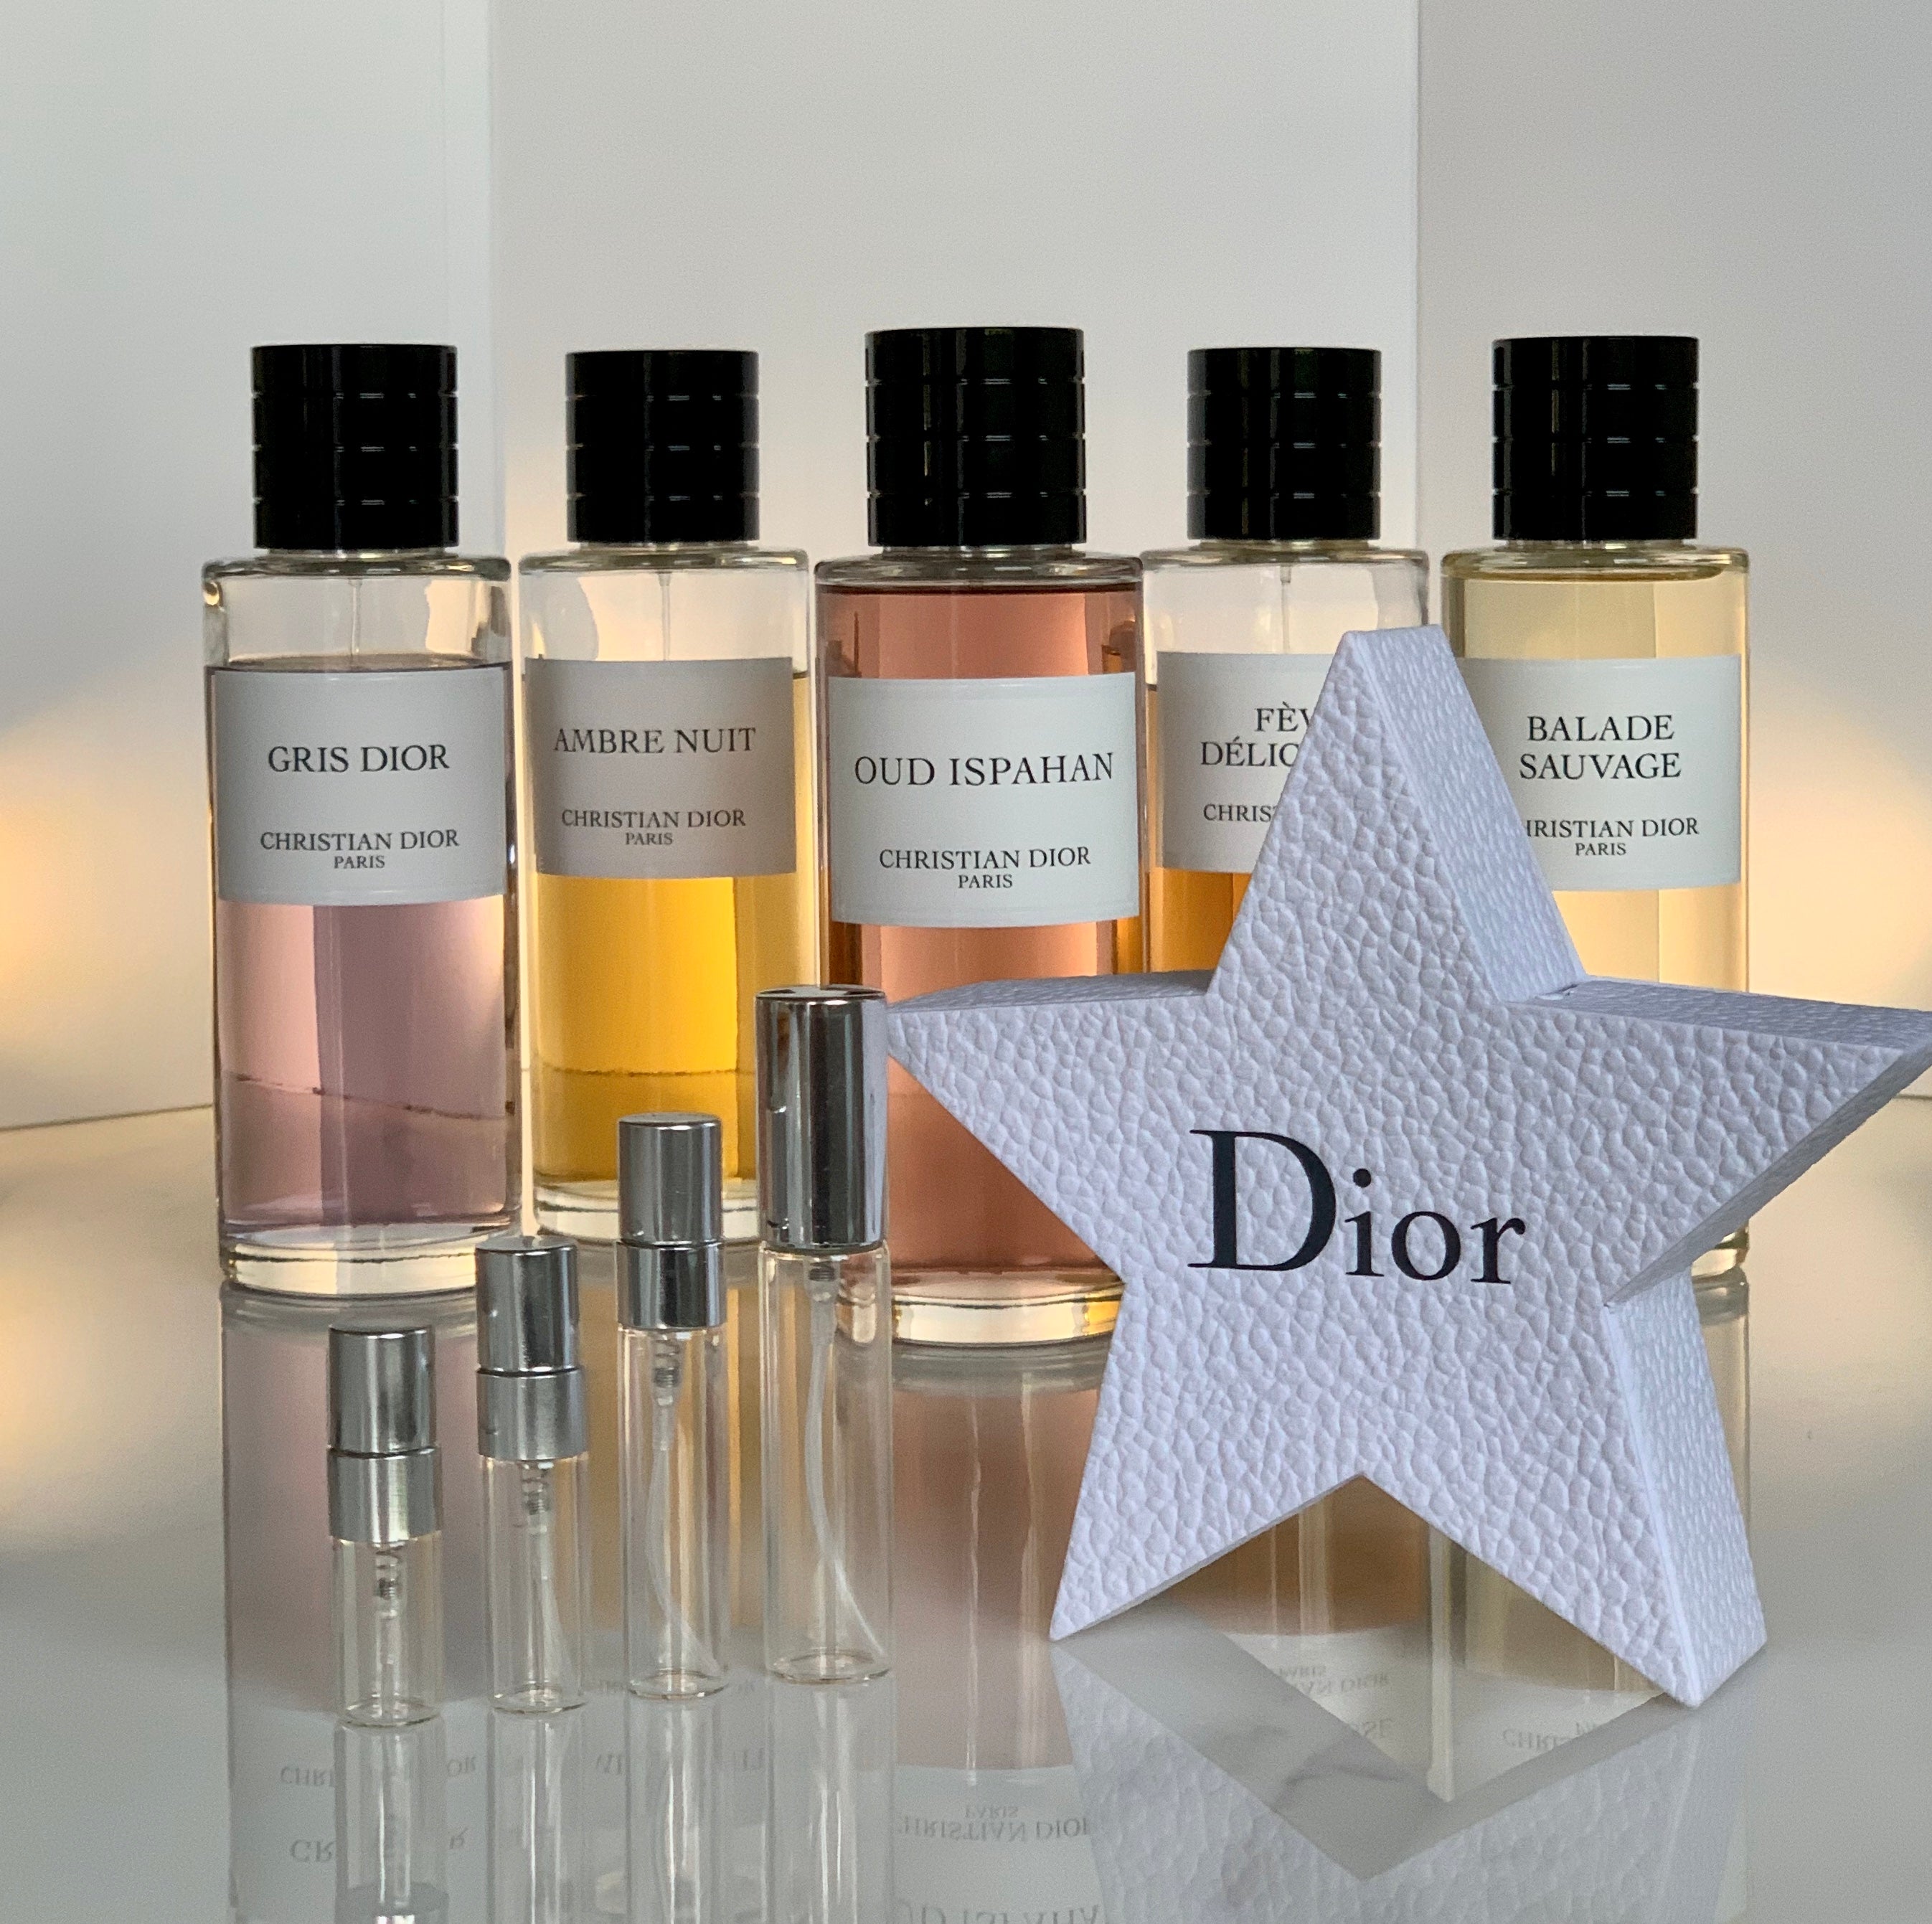 Gris Dior